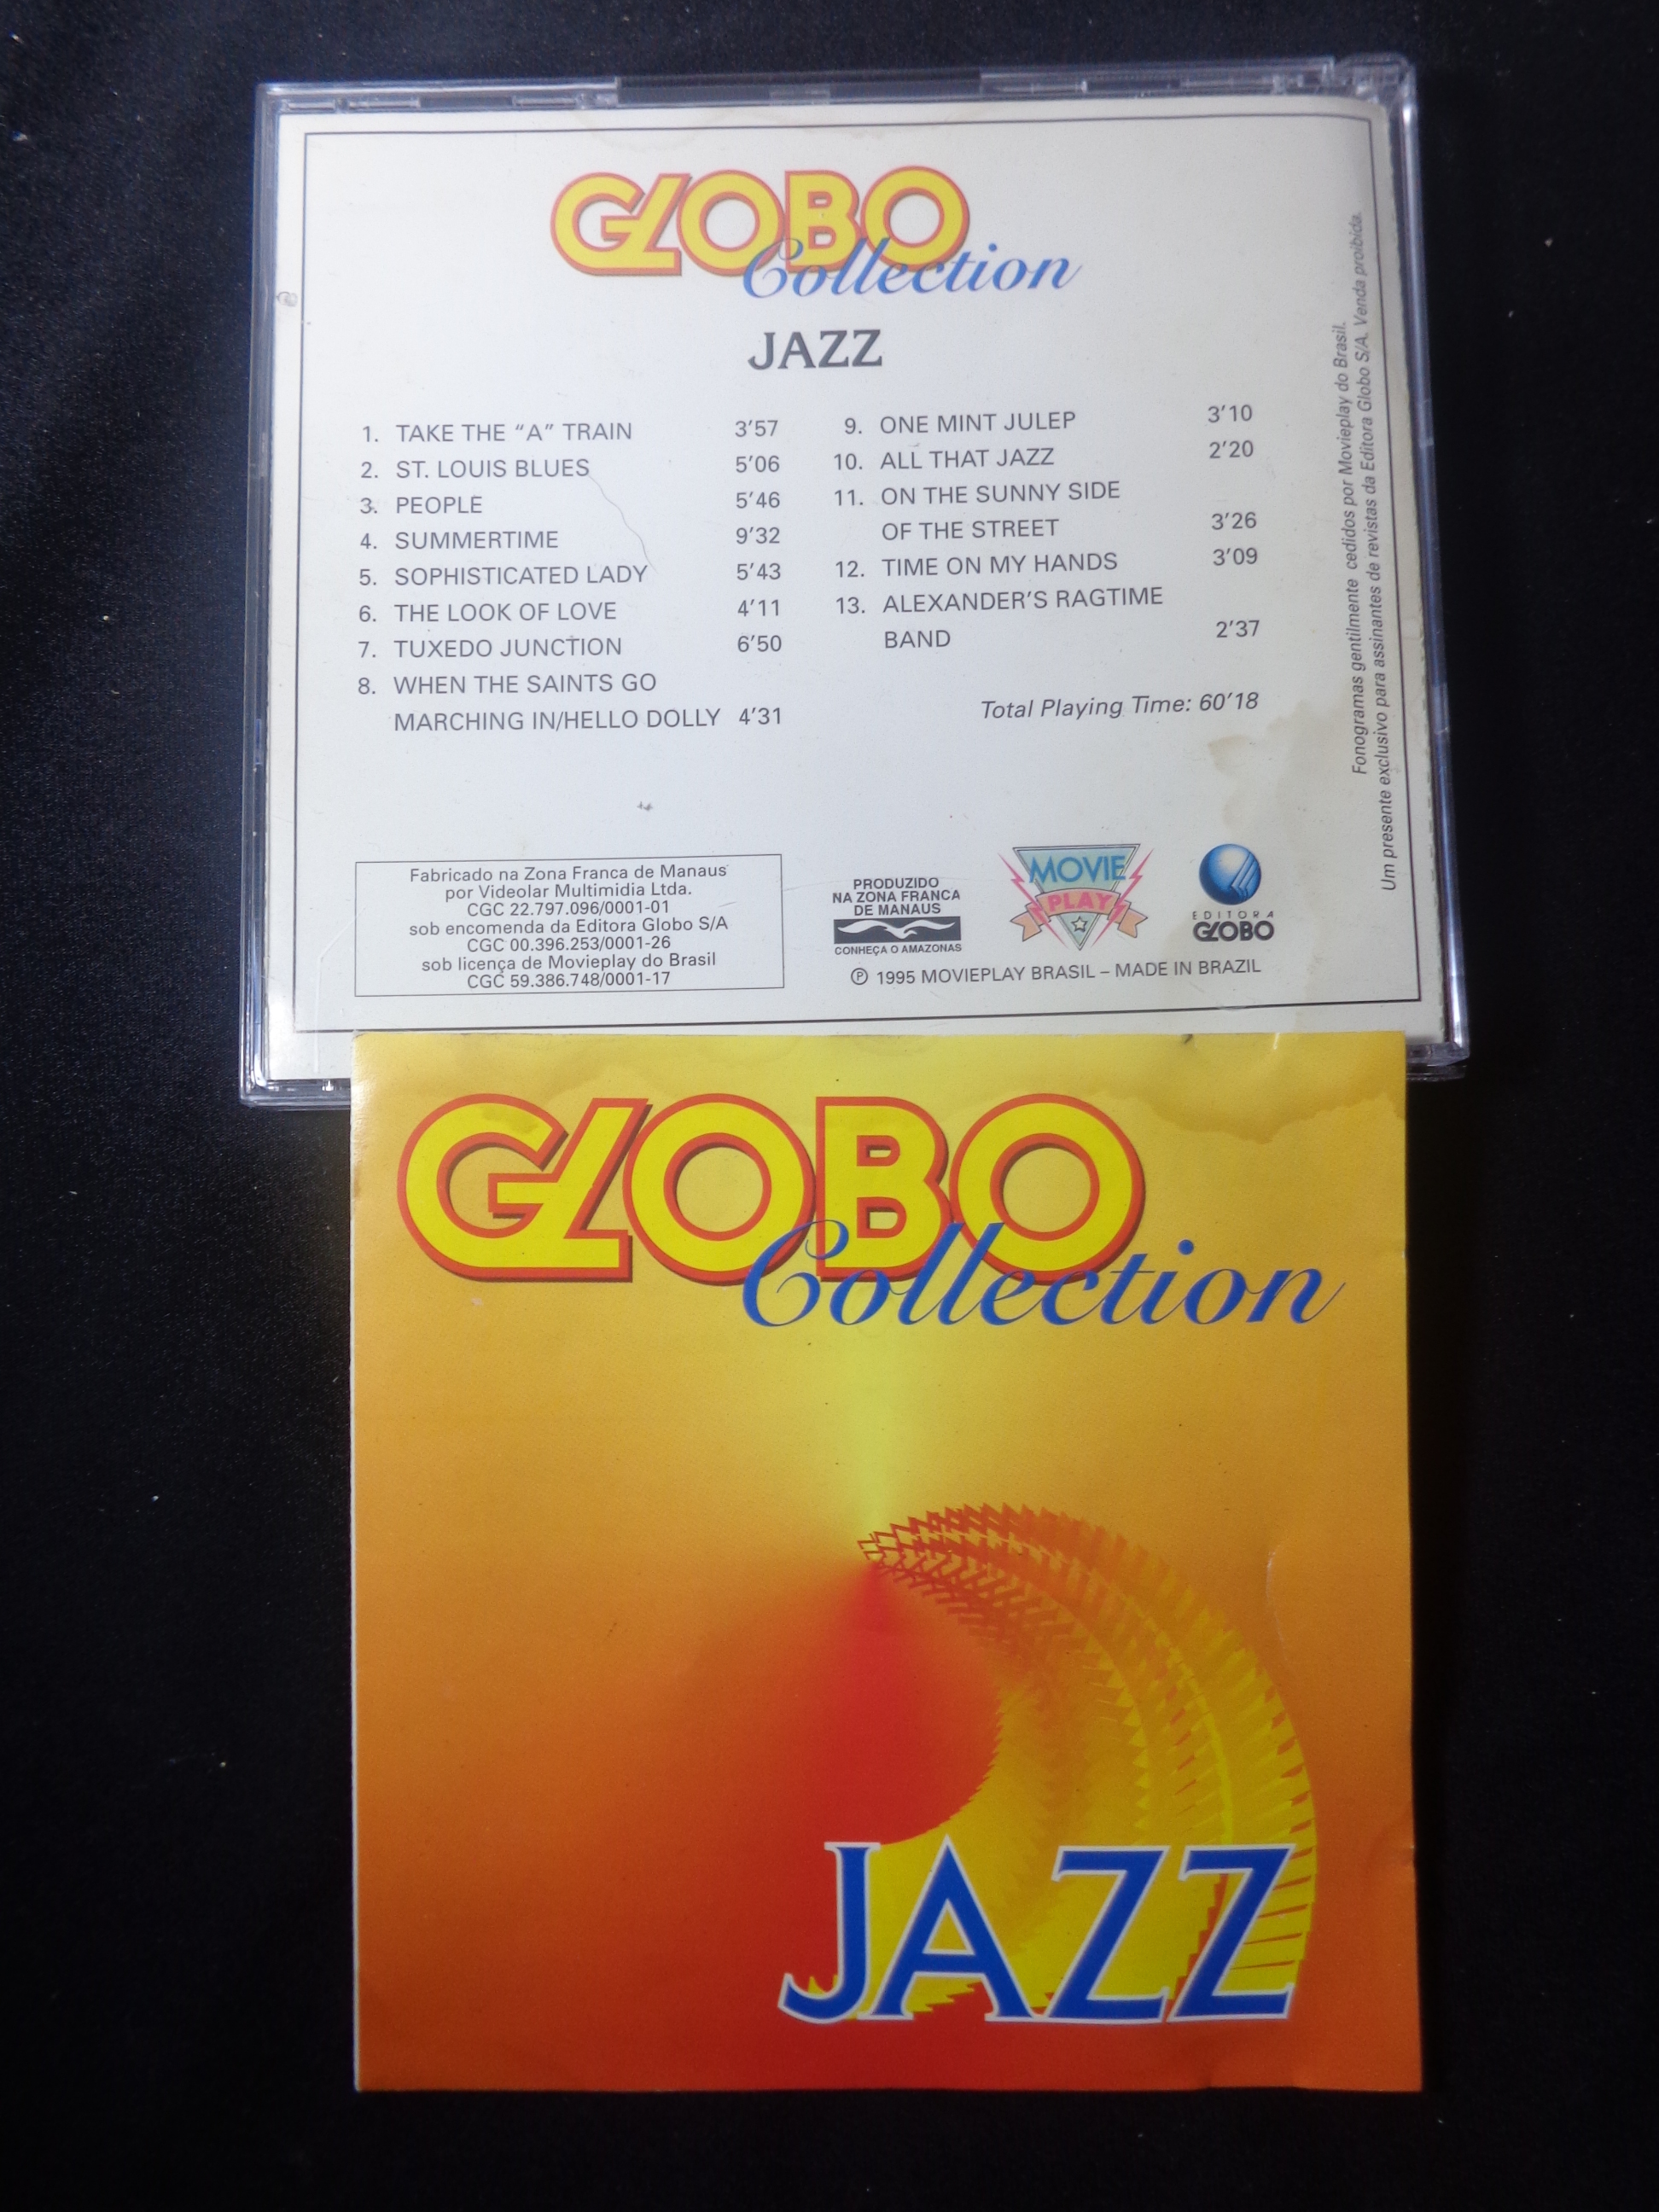 CD - Globo Collection - Jazz